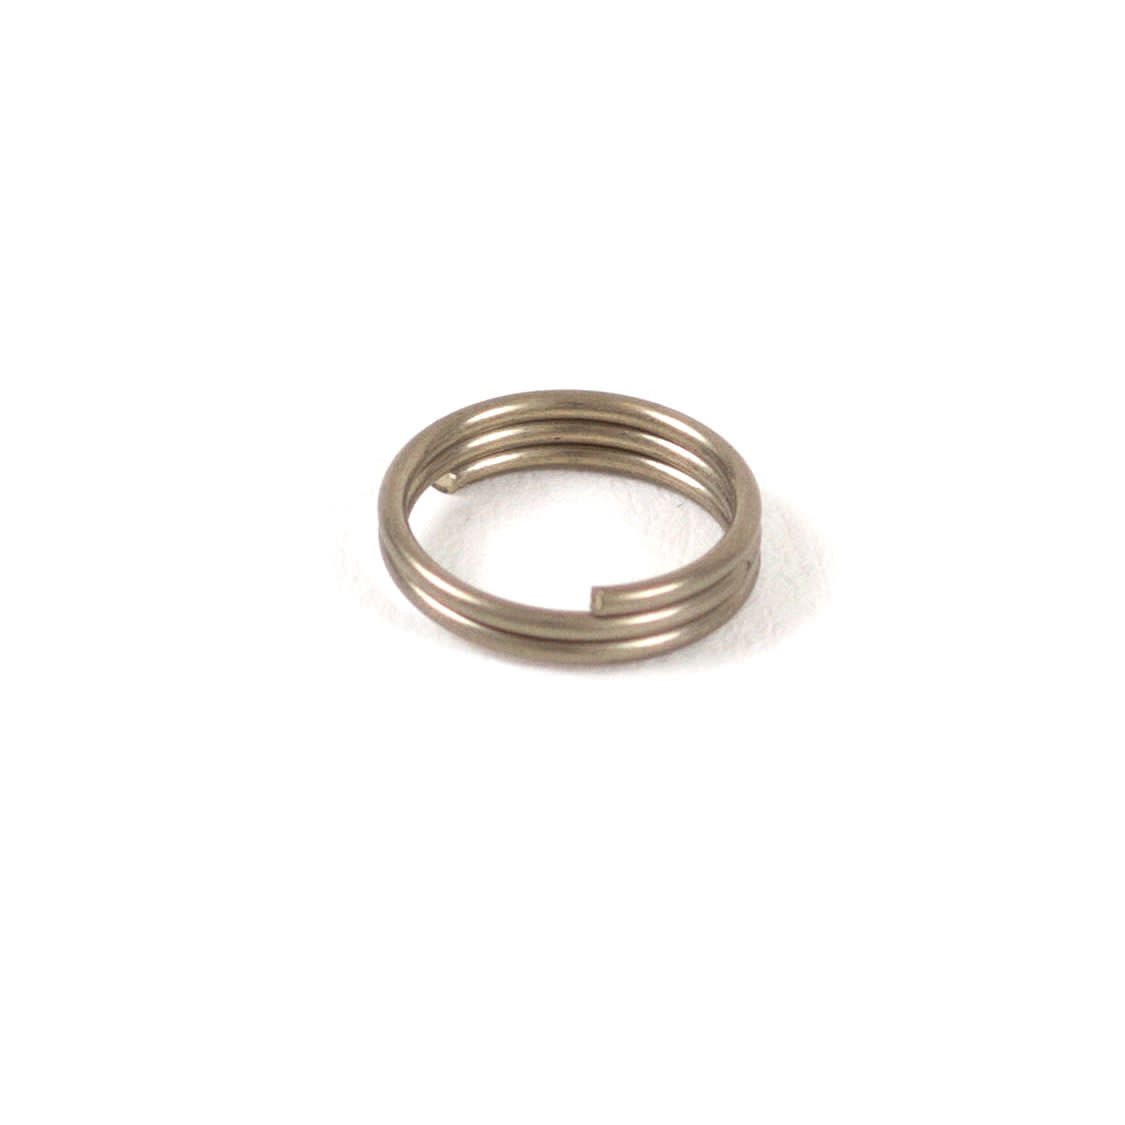 Split ring - Stainless Steel (Aisi 304)